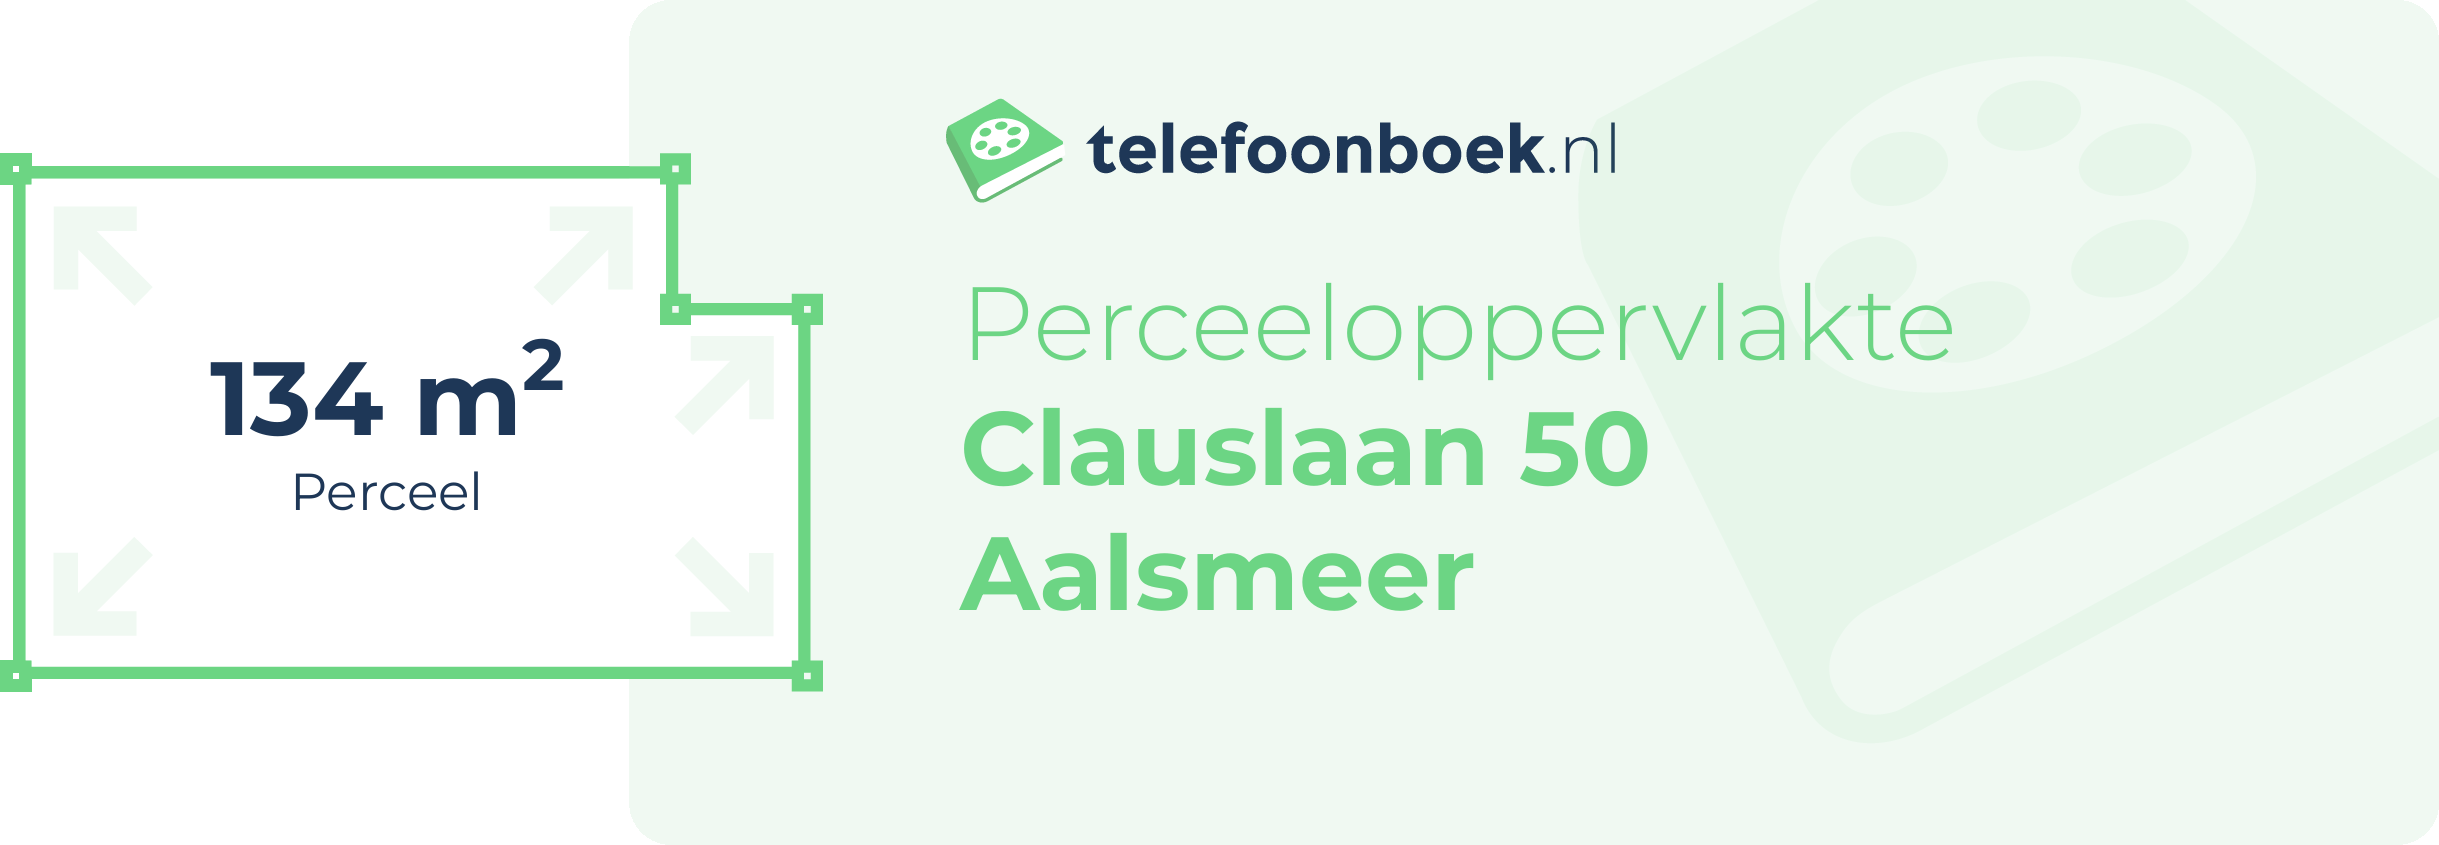 Perceeloppervlakte Clauslaan 50 Aalsmeer